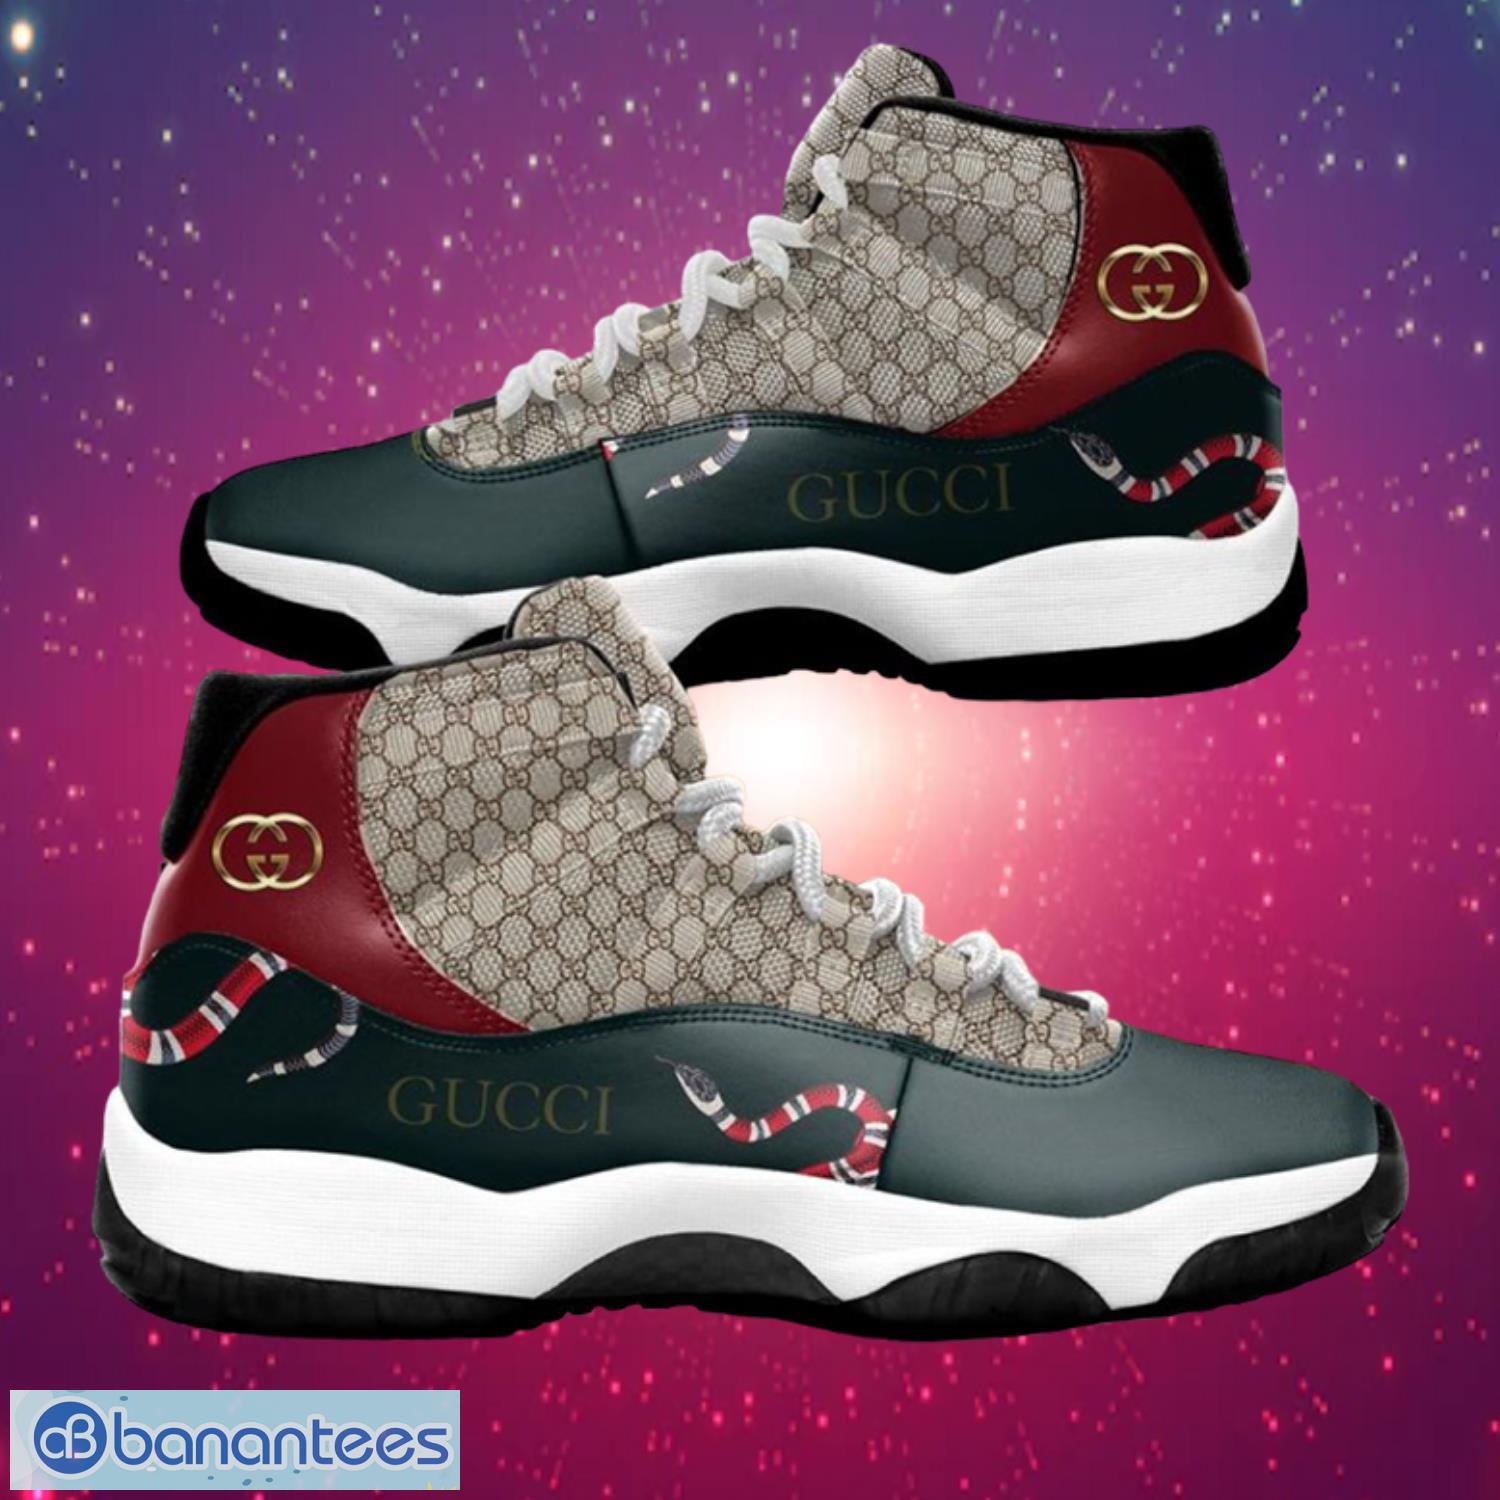 Gucci Brand Snake Air Jordan 11 Gucci Sneakers Gifts For Men Women Shoes  Design - Banantees